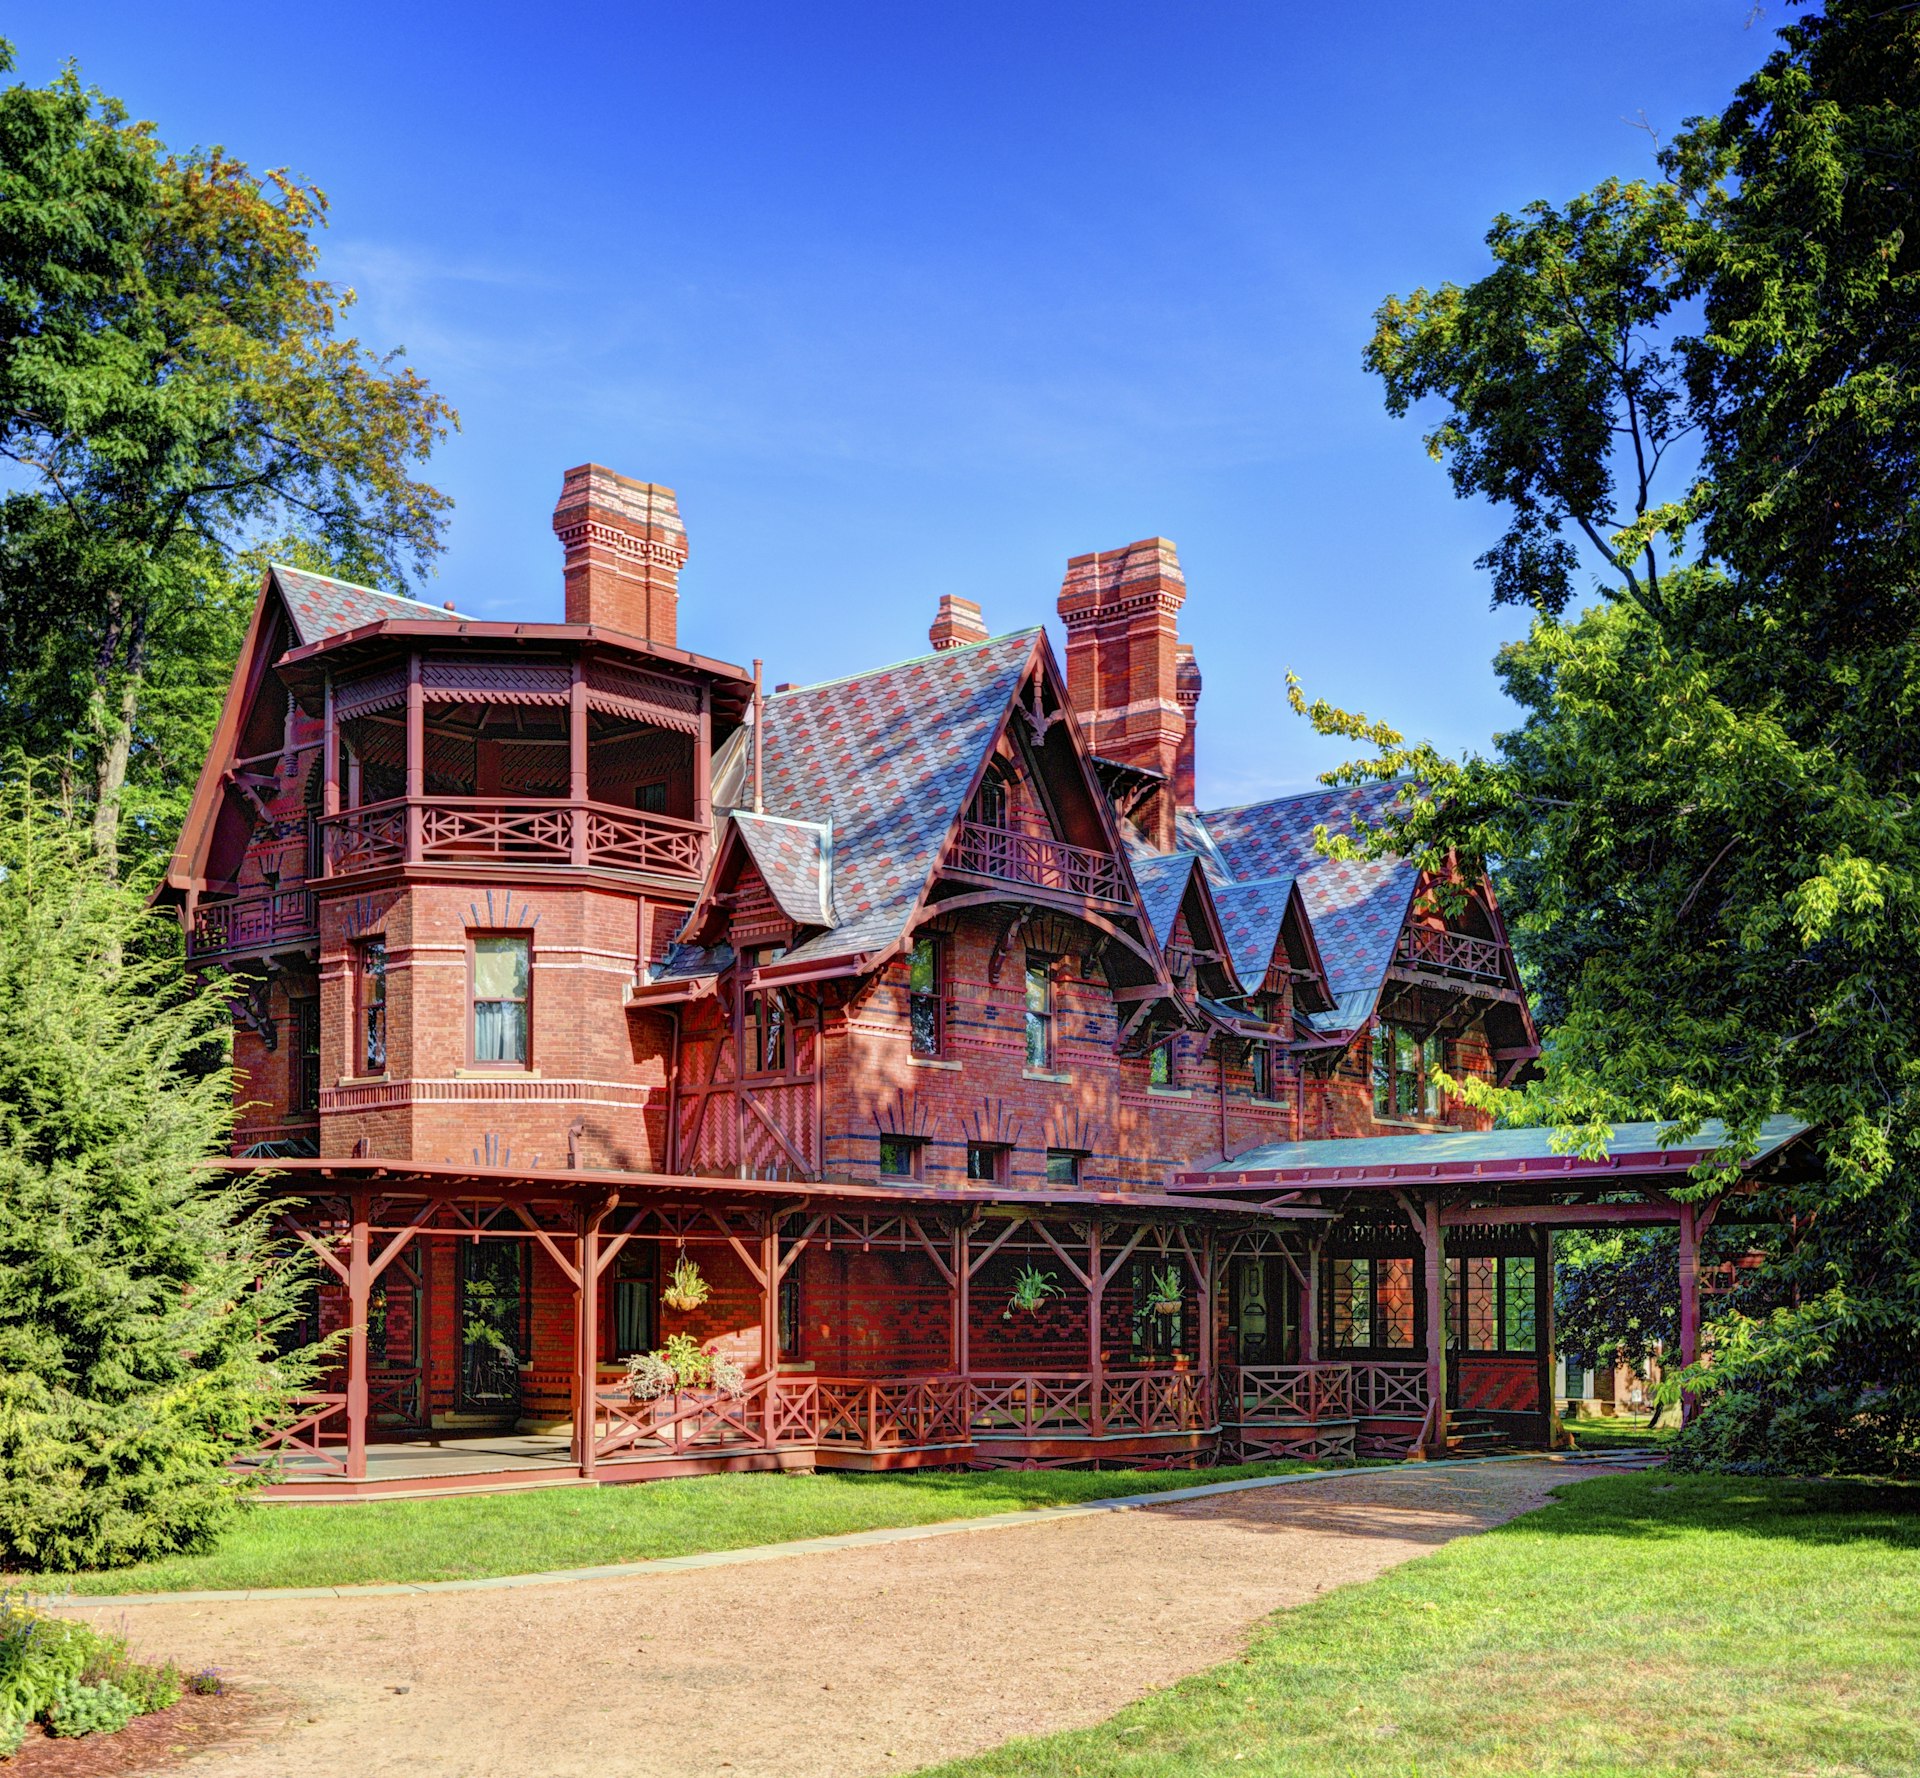 The Mark Twain House in Hartford, Connecticut